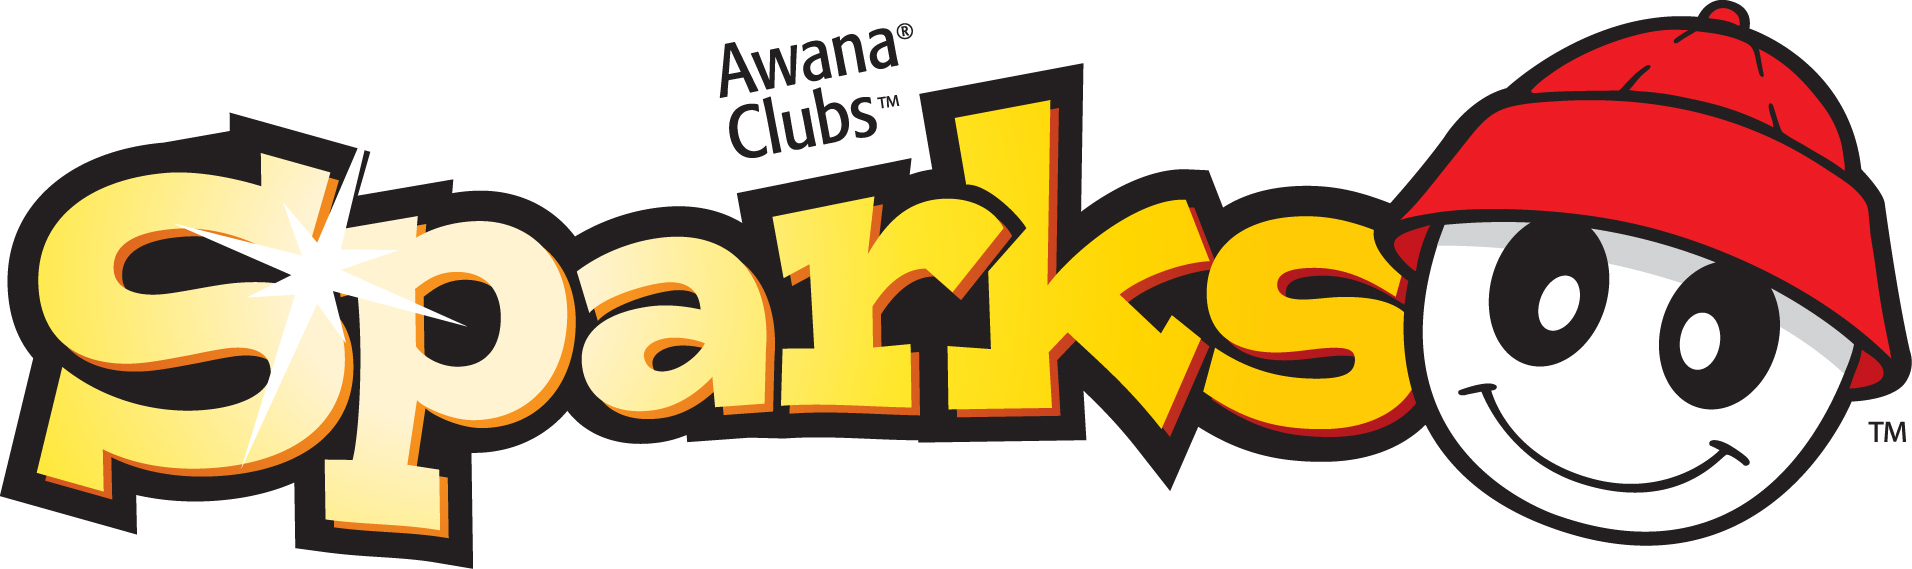 childrens-awana-sparks